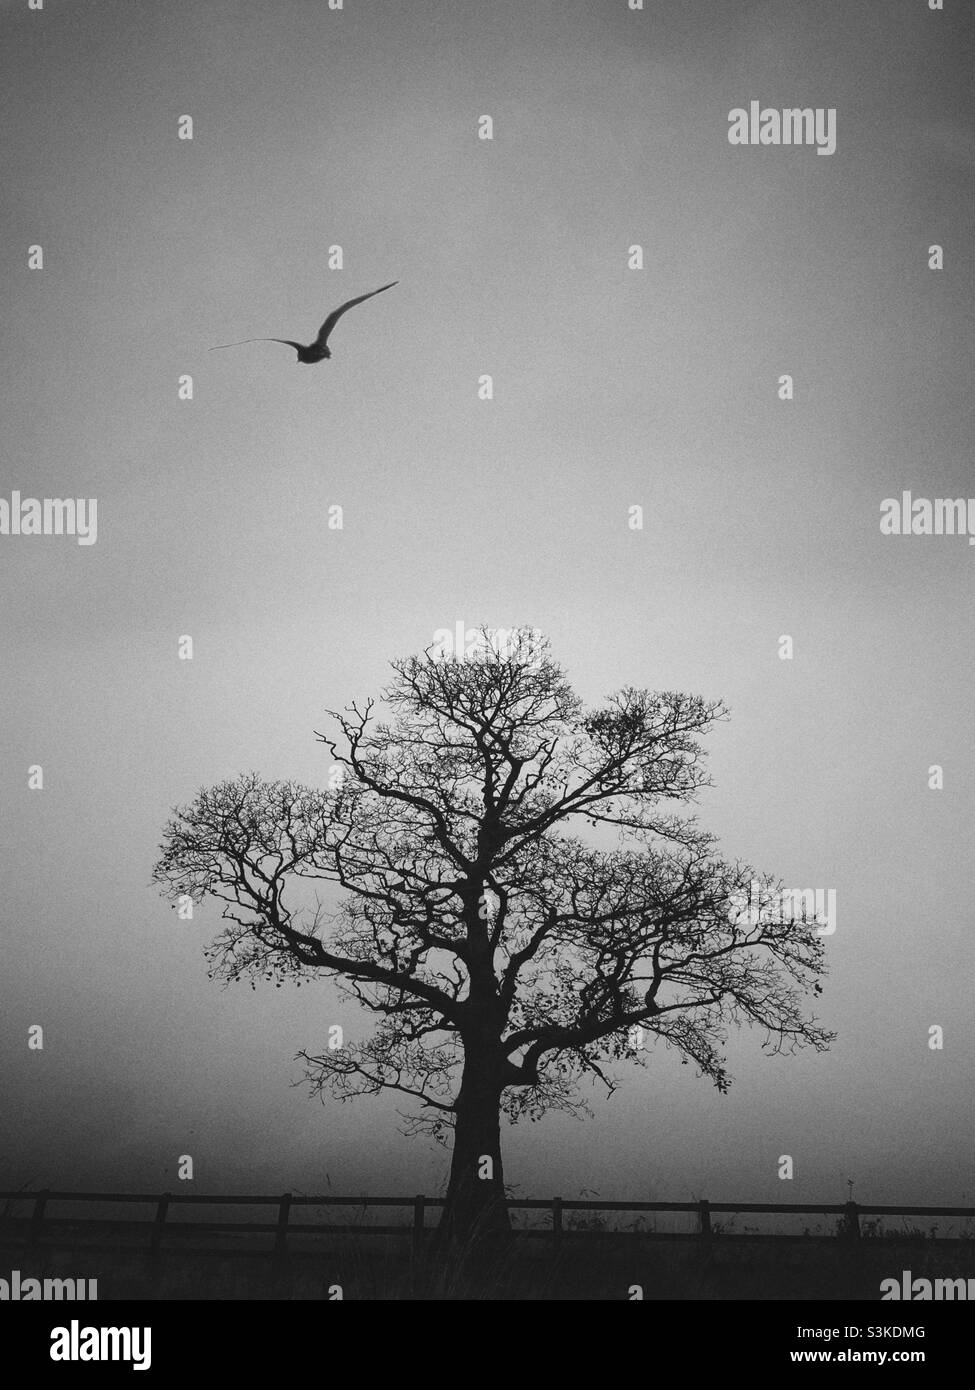 Bird flying over single bare tree in winter Stock Photo